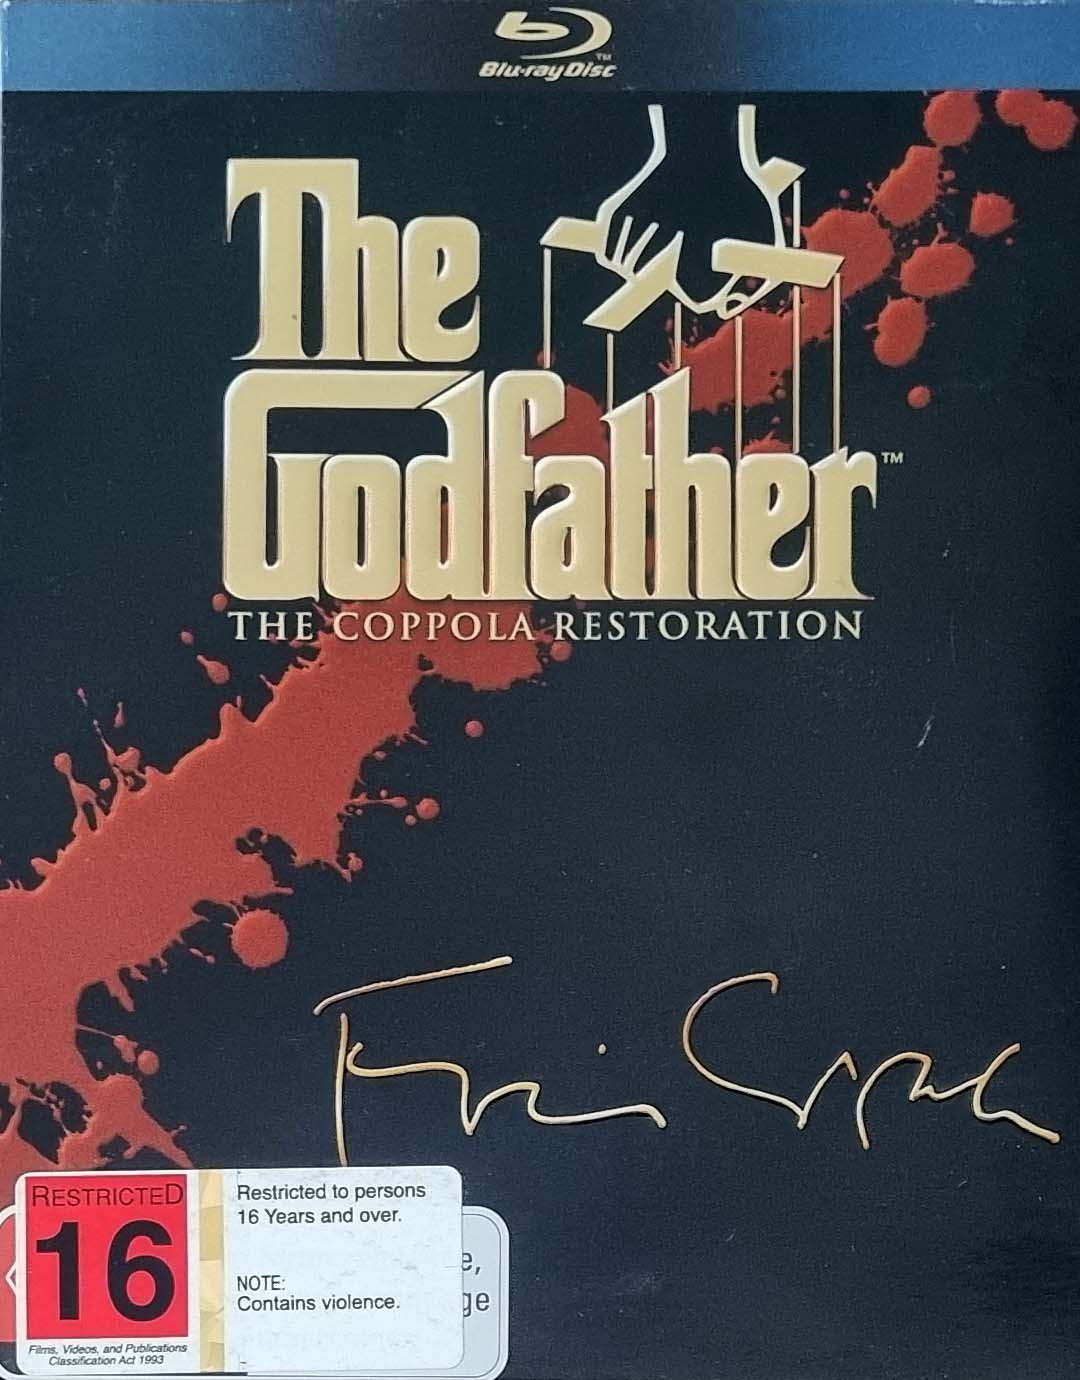 The Godfather Trilogy: The Coppola Restoration (Blu Ray)